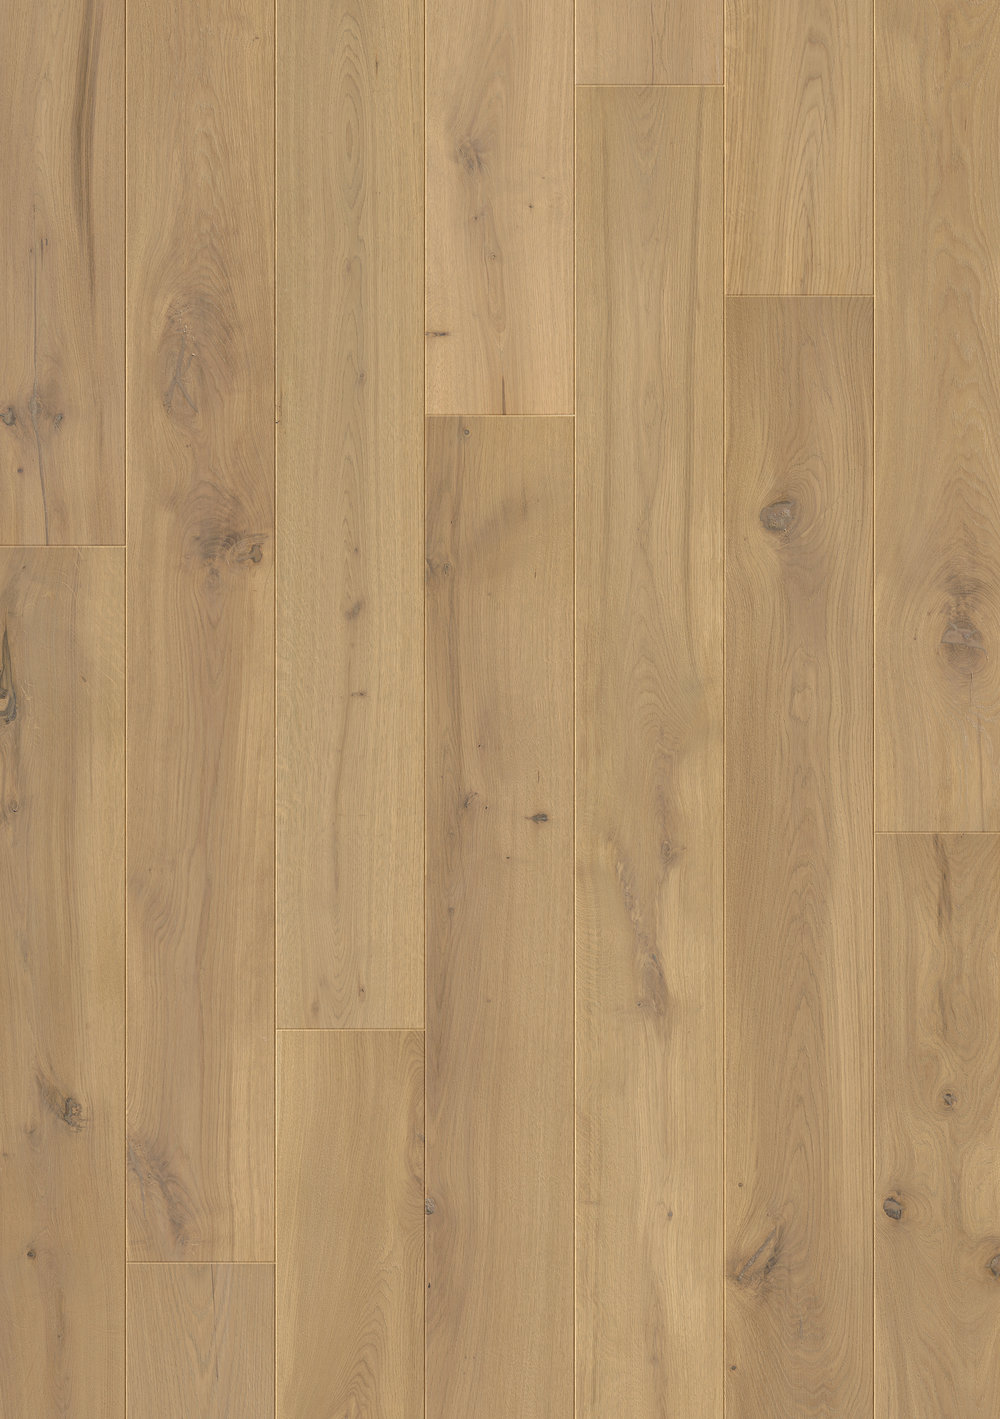 Step Palazzo Long And Wide Oak Planks, Bargain Hardwood Floors